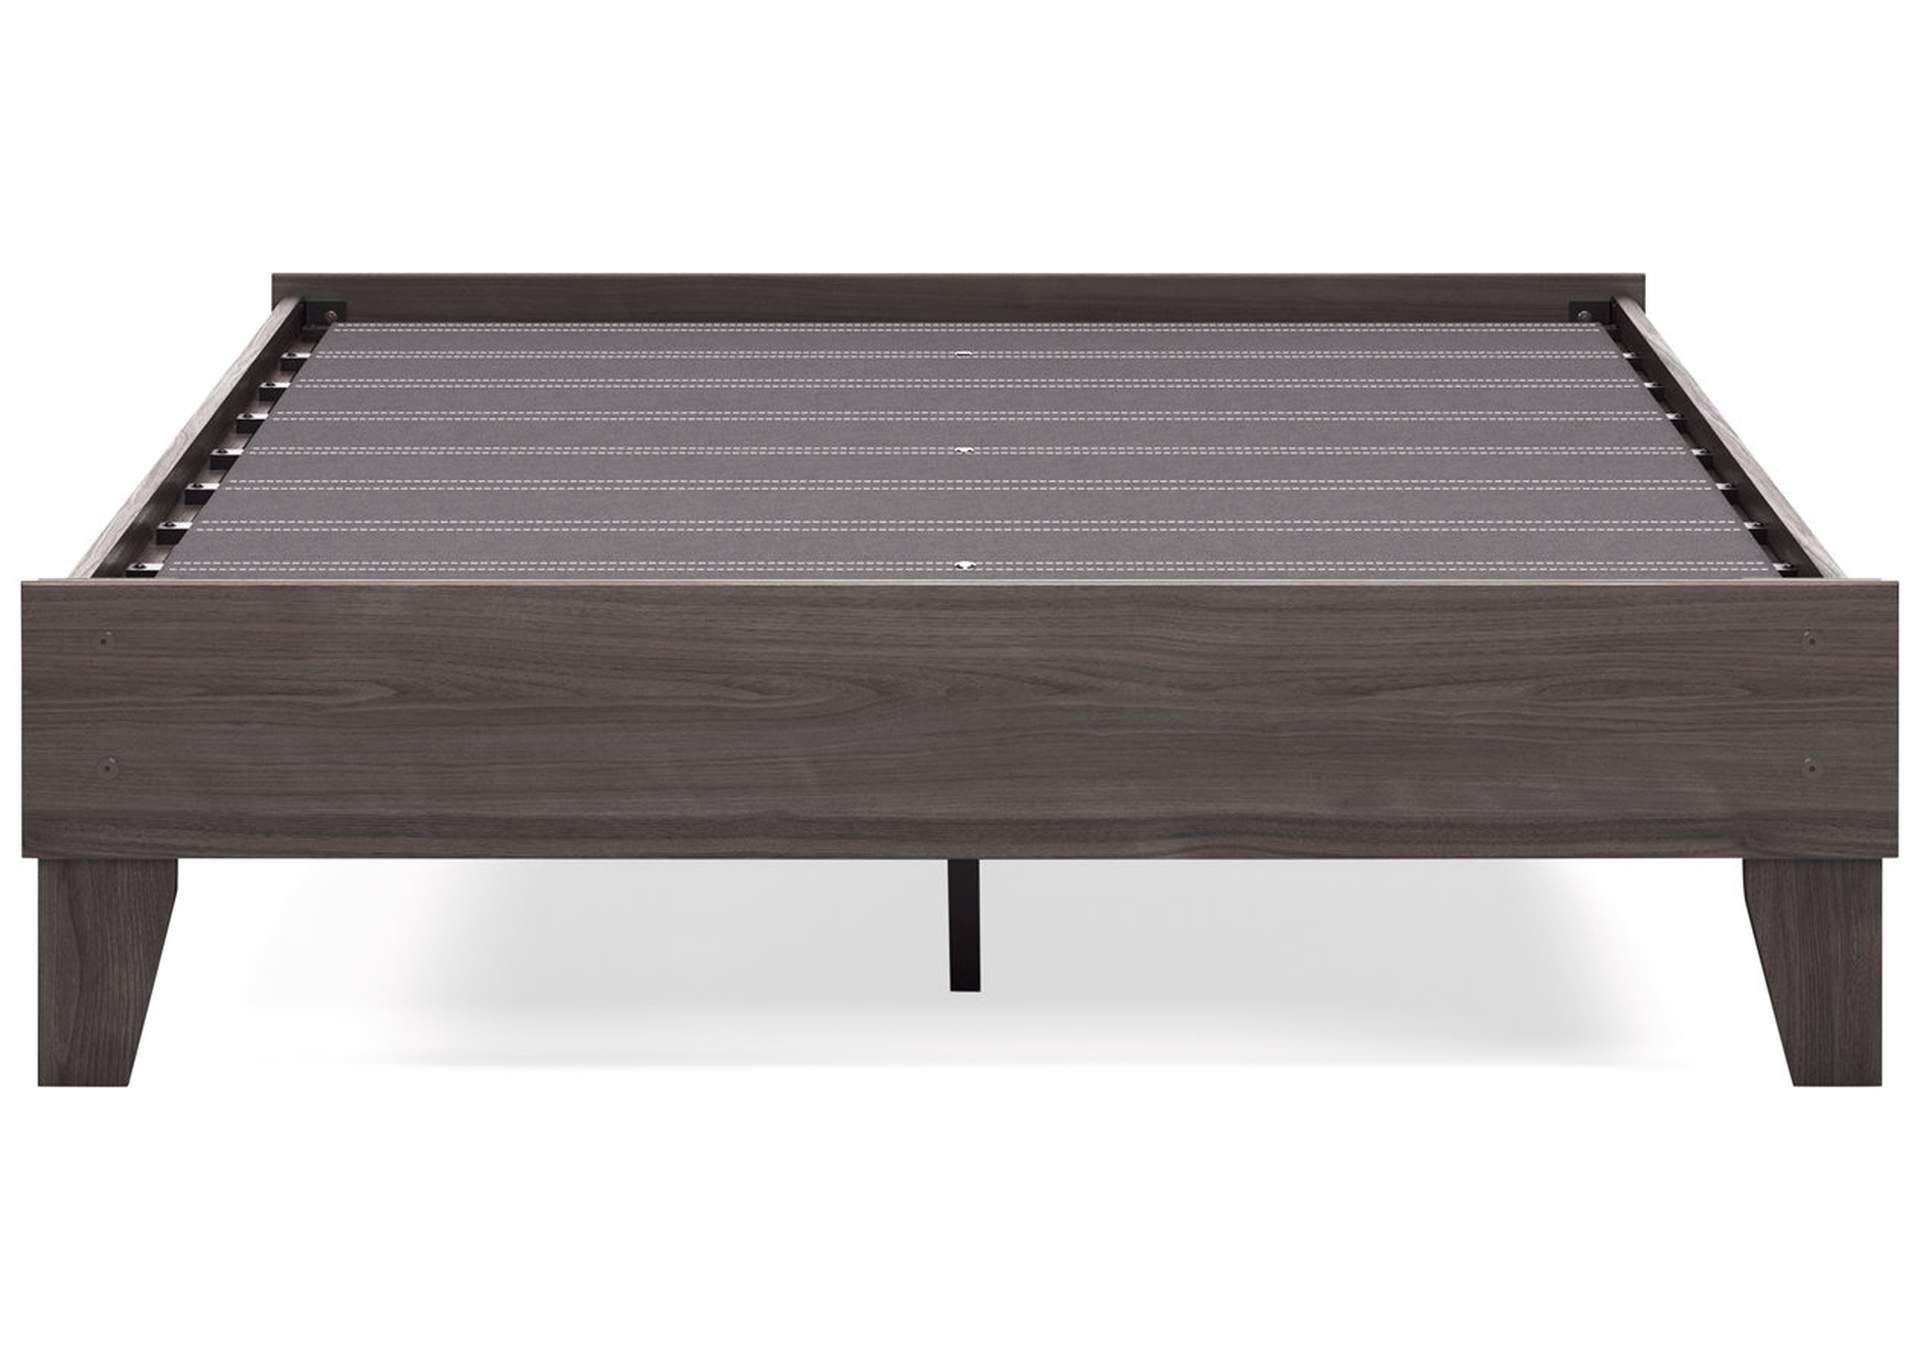 Brymont Full Platform Bed,Signature Design By Ashley